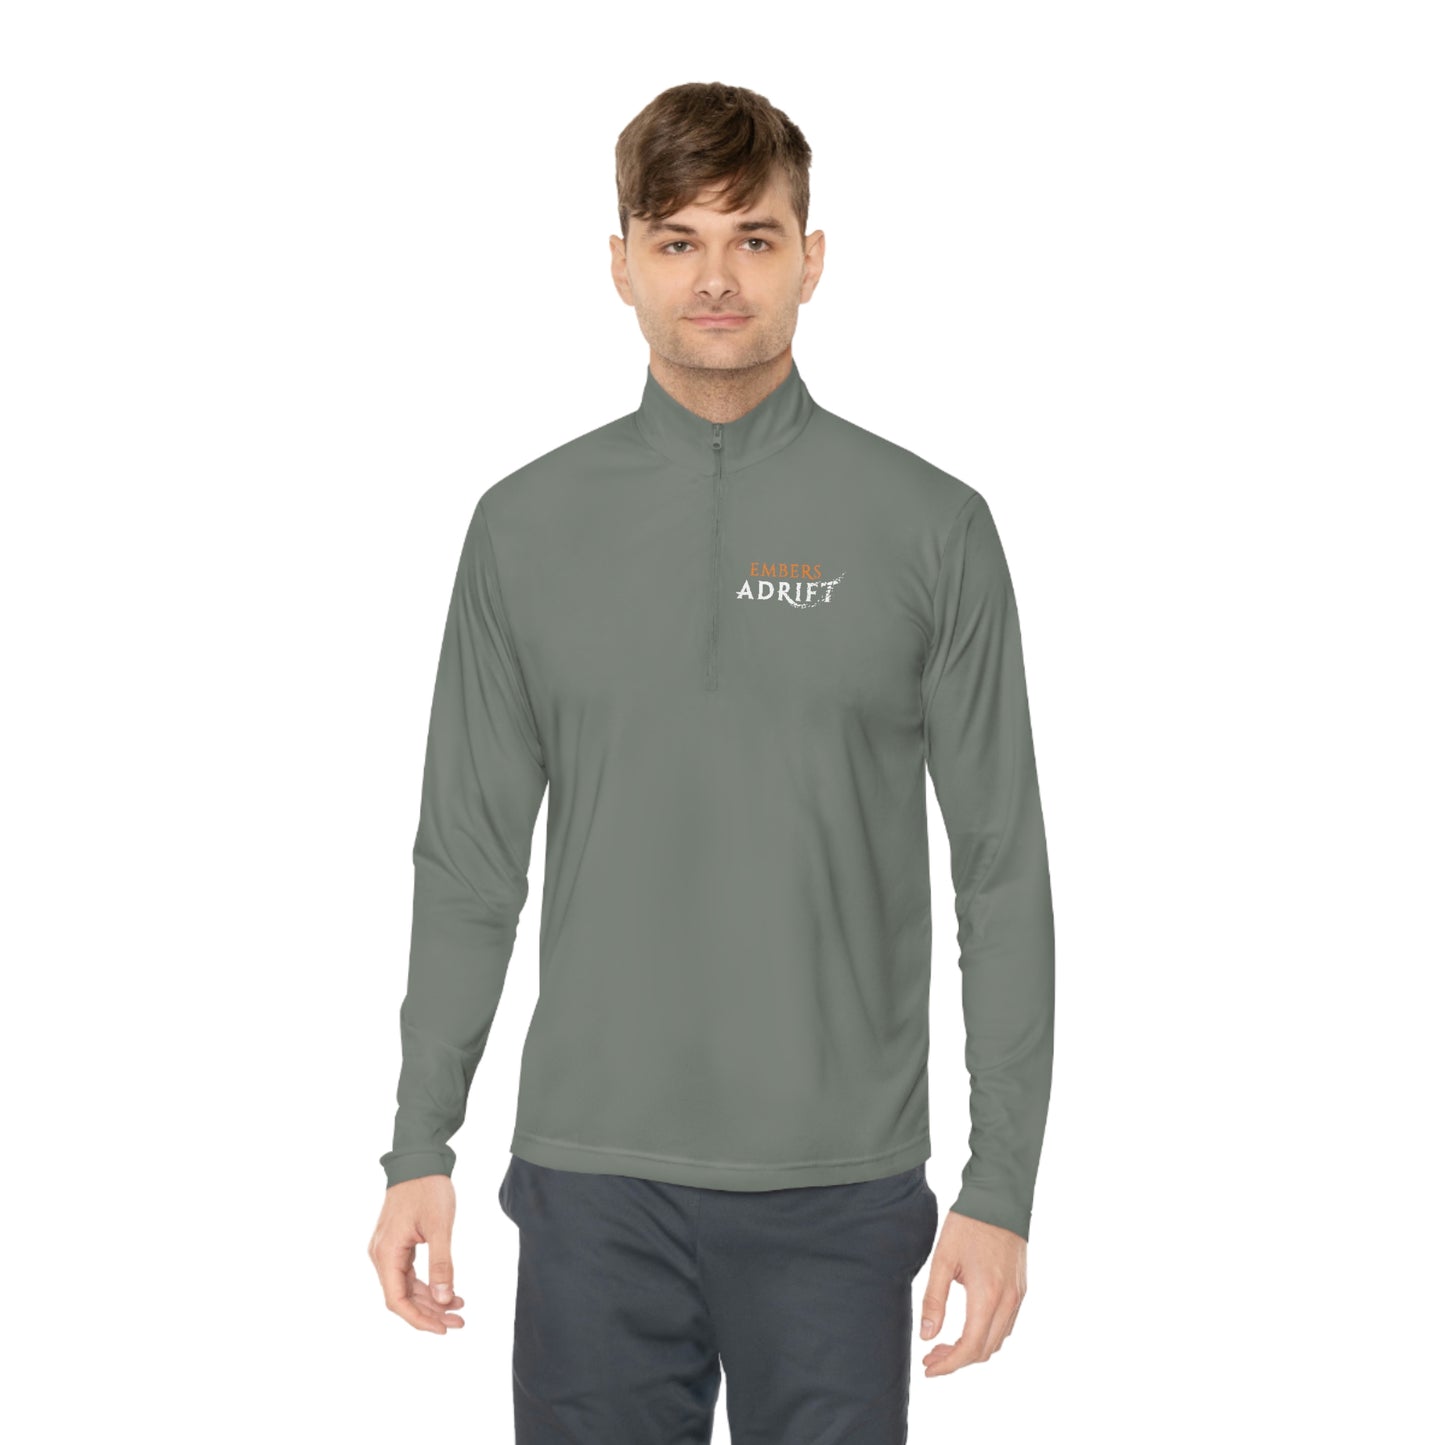 Your Favorite Shirt (Unisex Quarter-Zip)